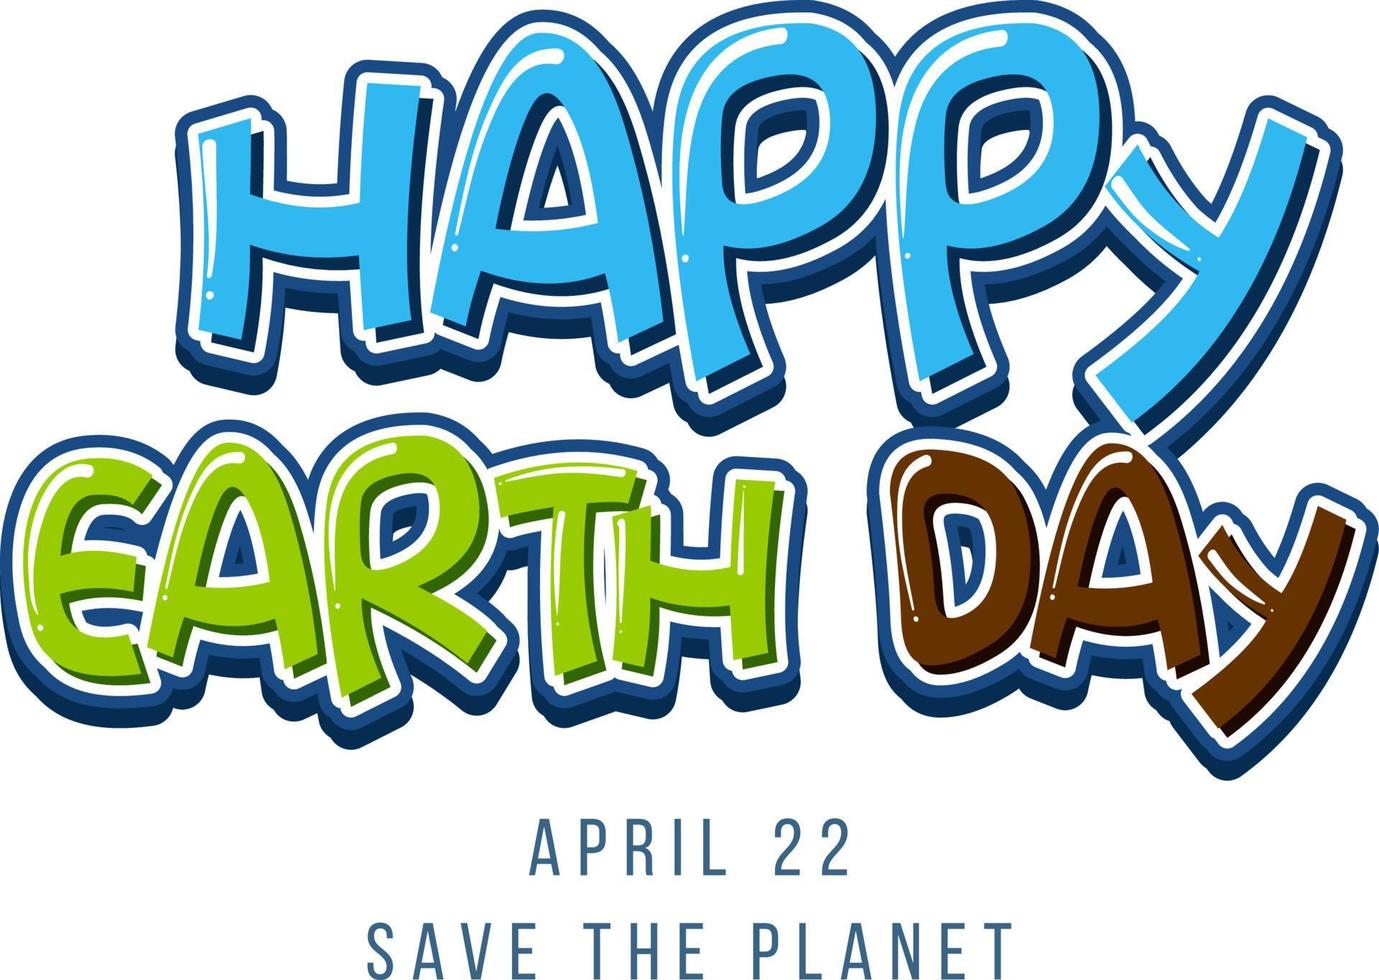 Happy Earth Day typography logo design vector